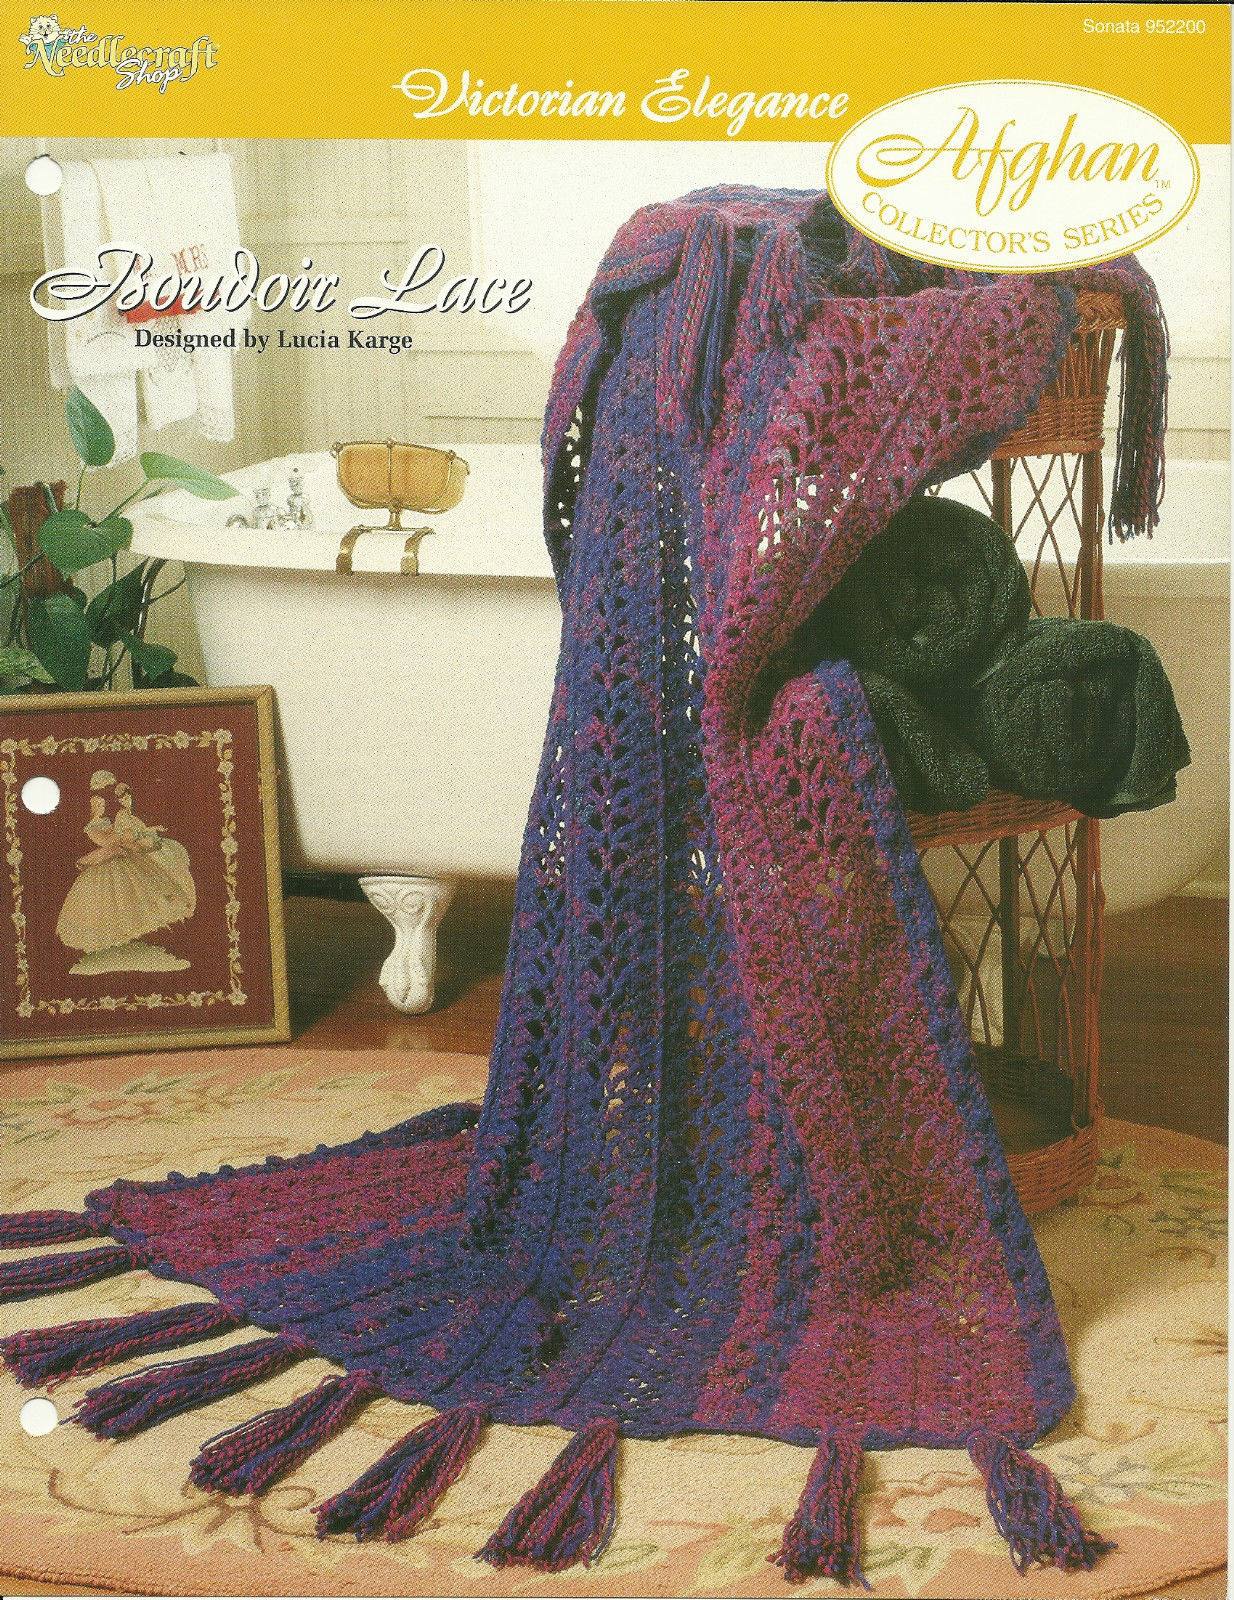 Needlecraft Shop Crochet Pattern 952200 Boudoir Lace Afghan Collectors Series - £2.35 GBP